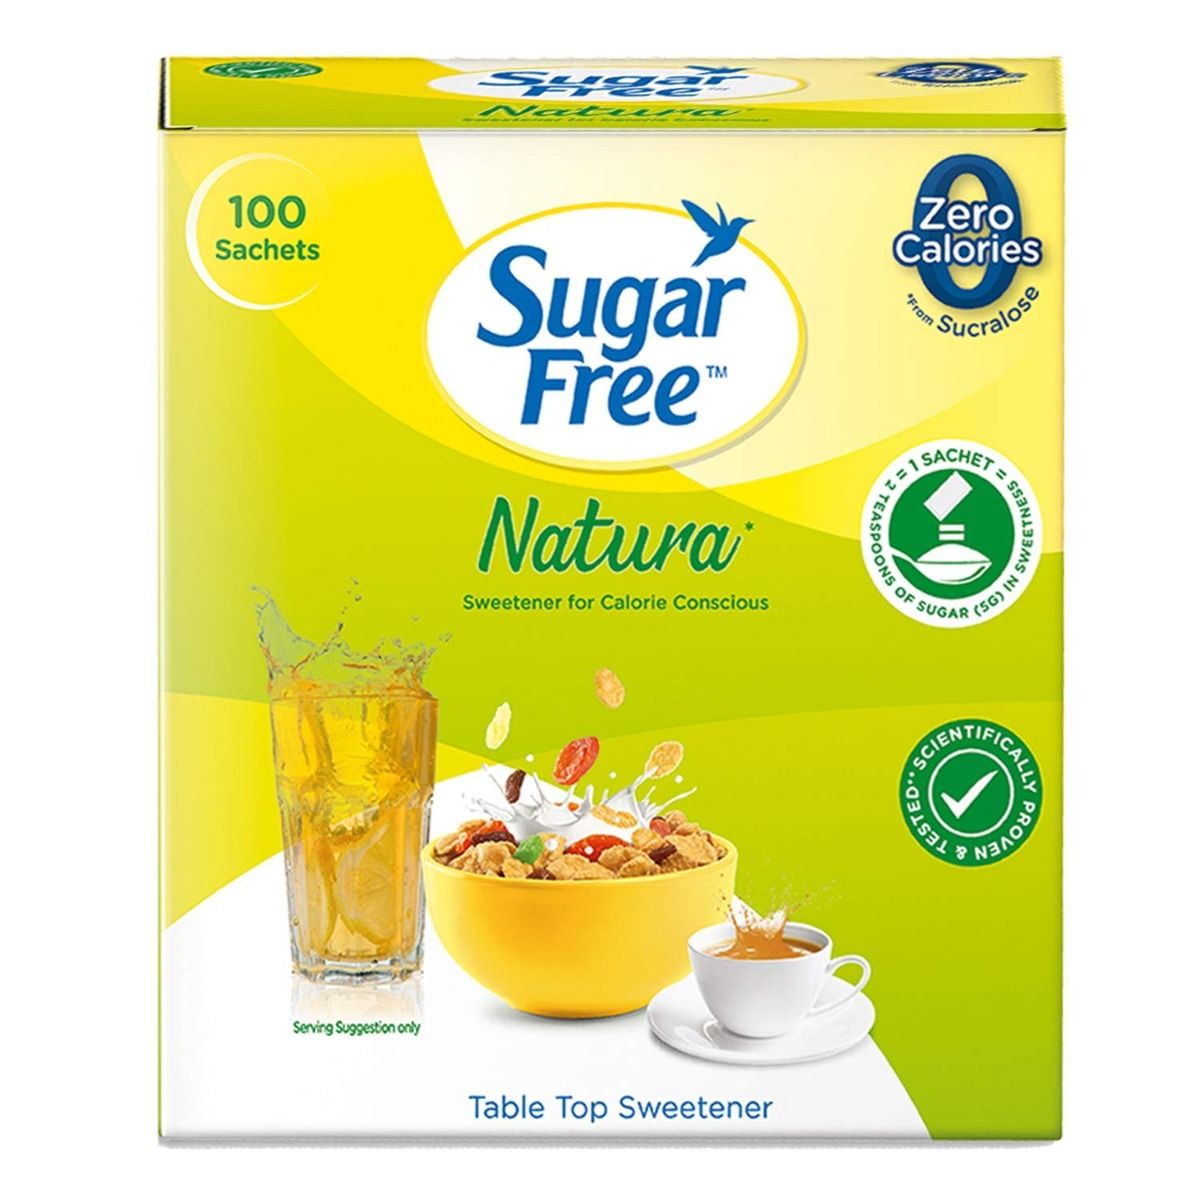 Buy Sugar Free Natura Low Calorie Sweetener, 100 Pellets Online